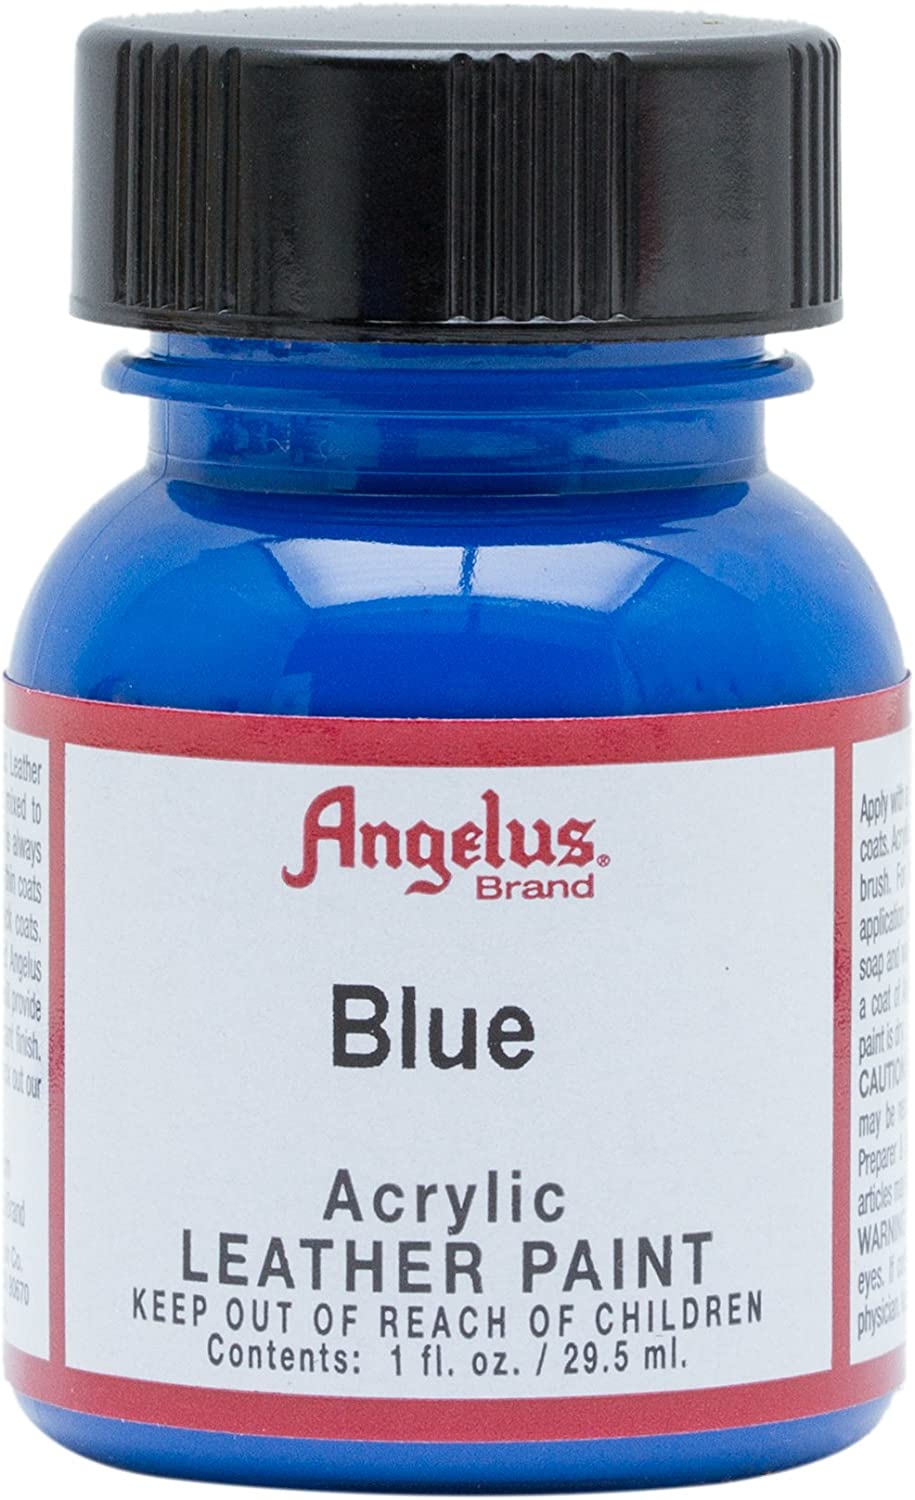 Angelus Acrylic Leather Paint Pale Blue 1 oz.